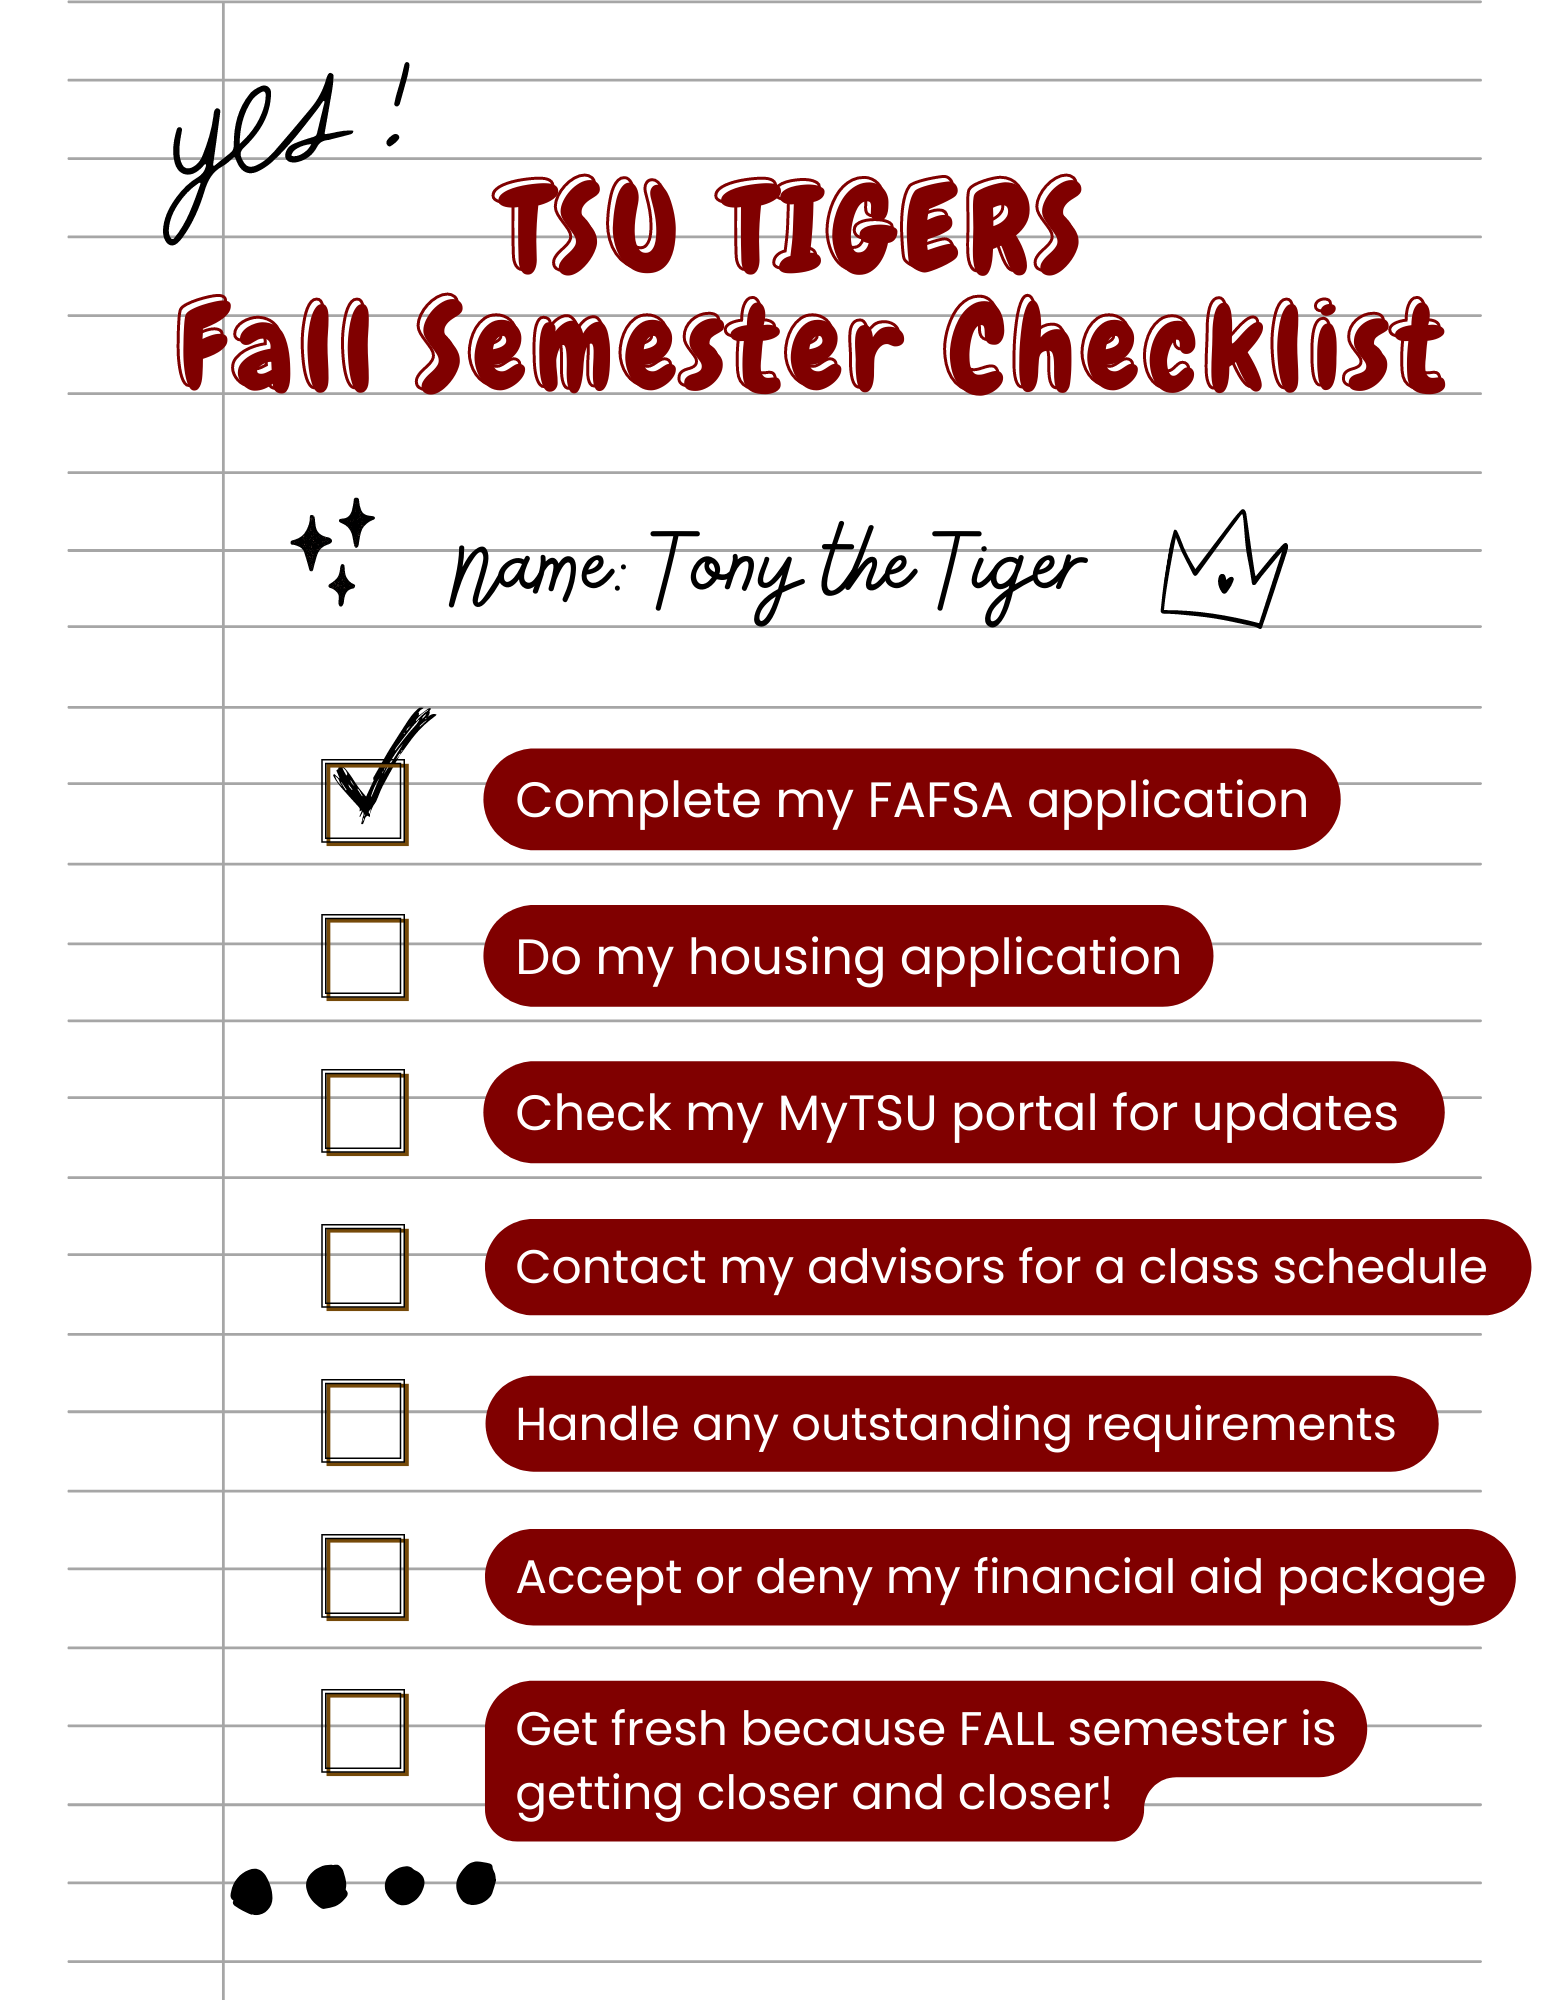 fall-semester-checklist.png